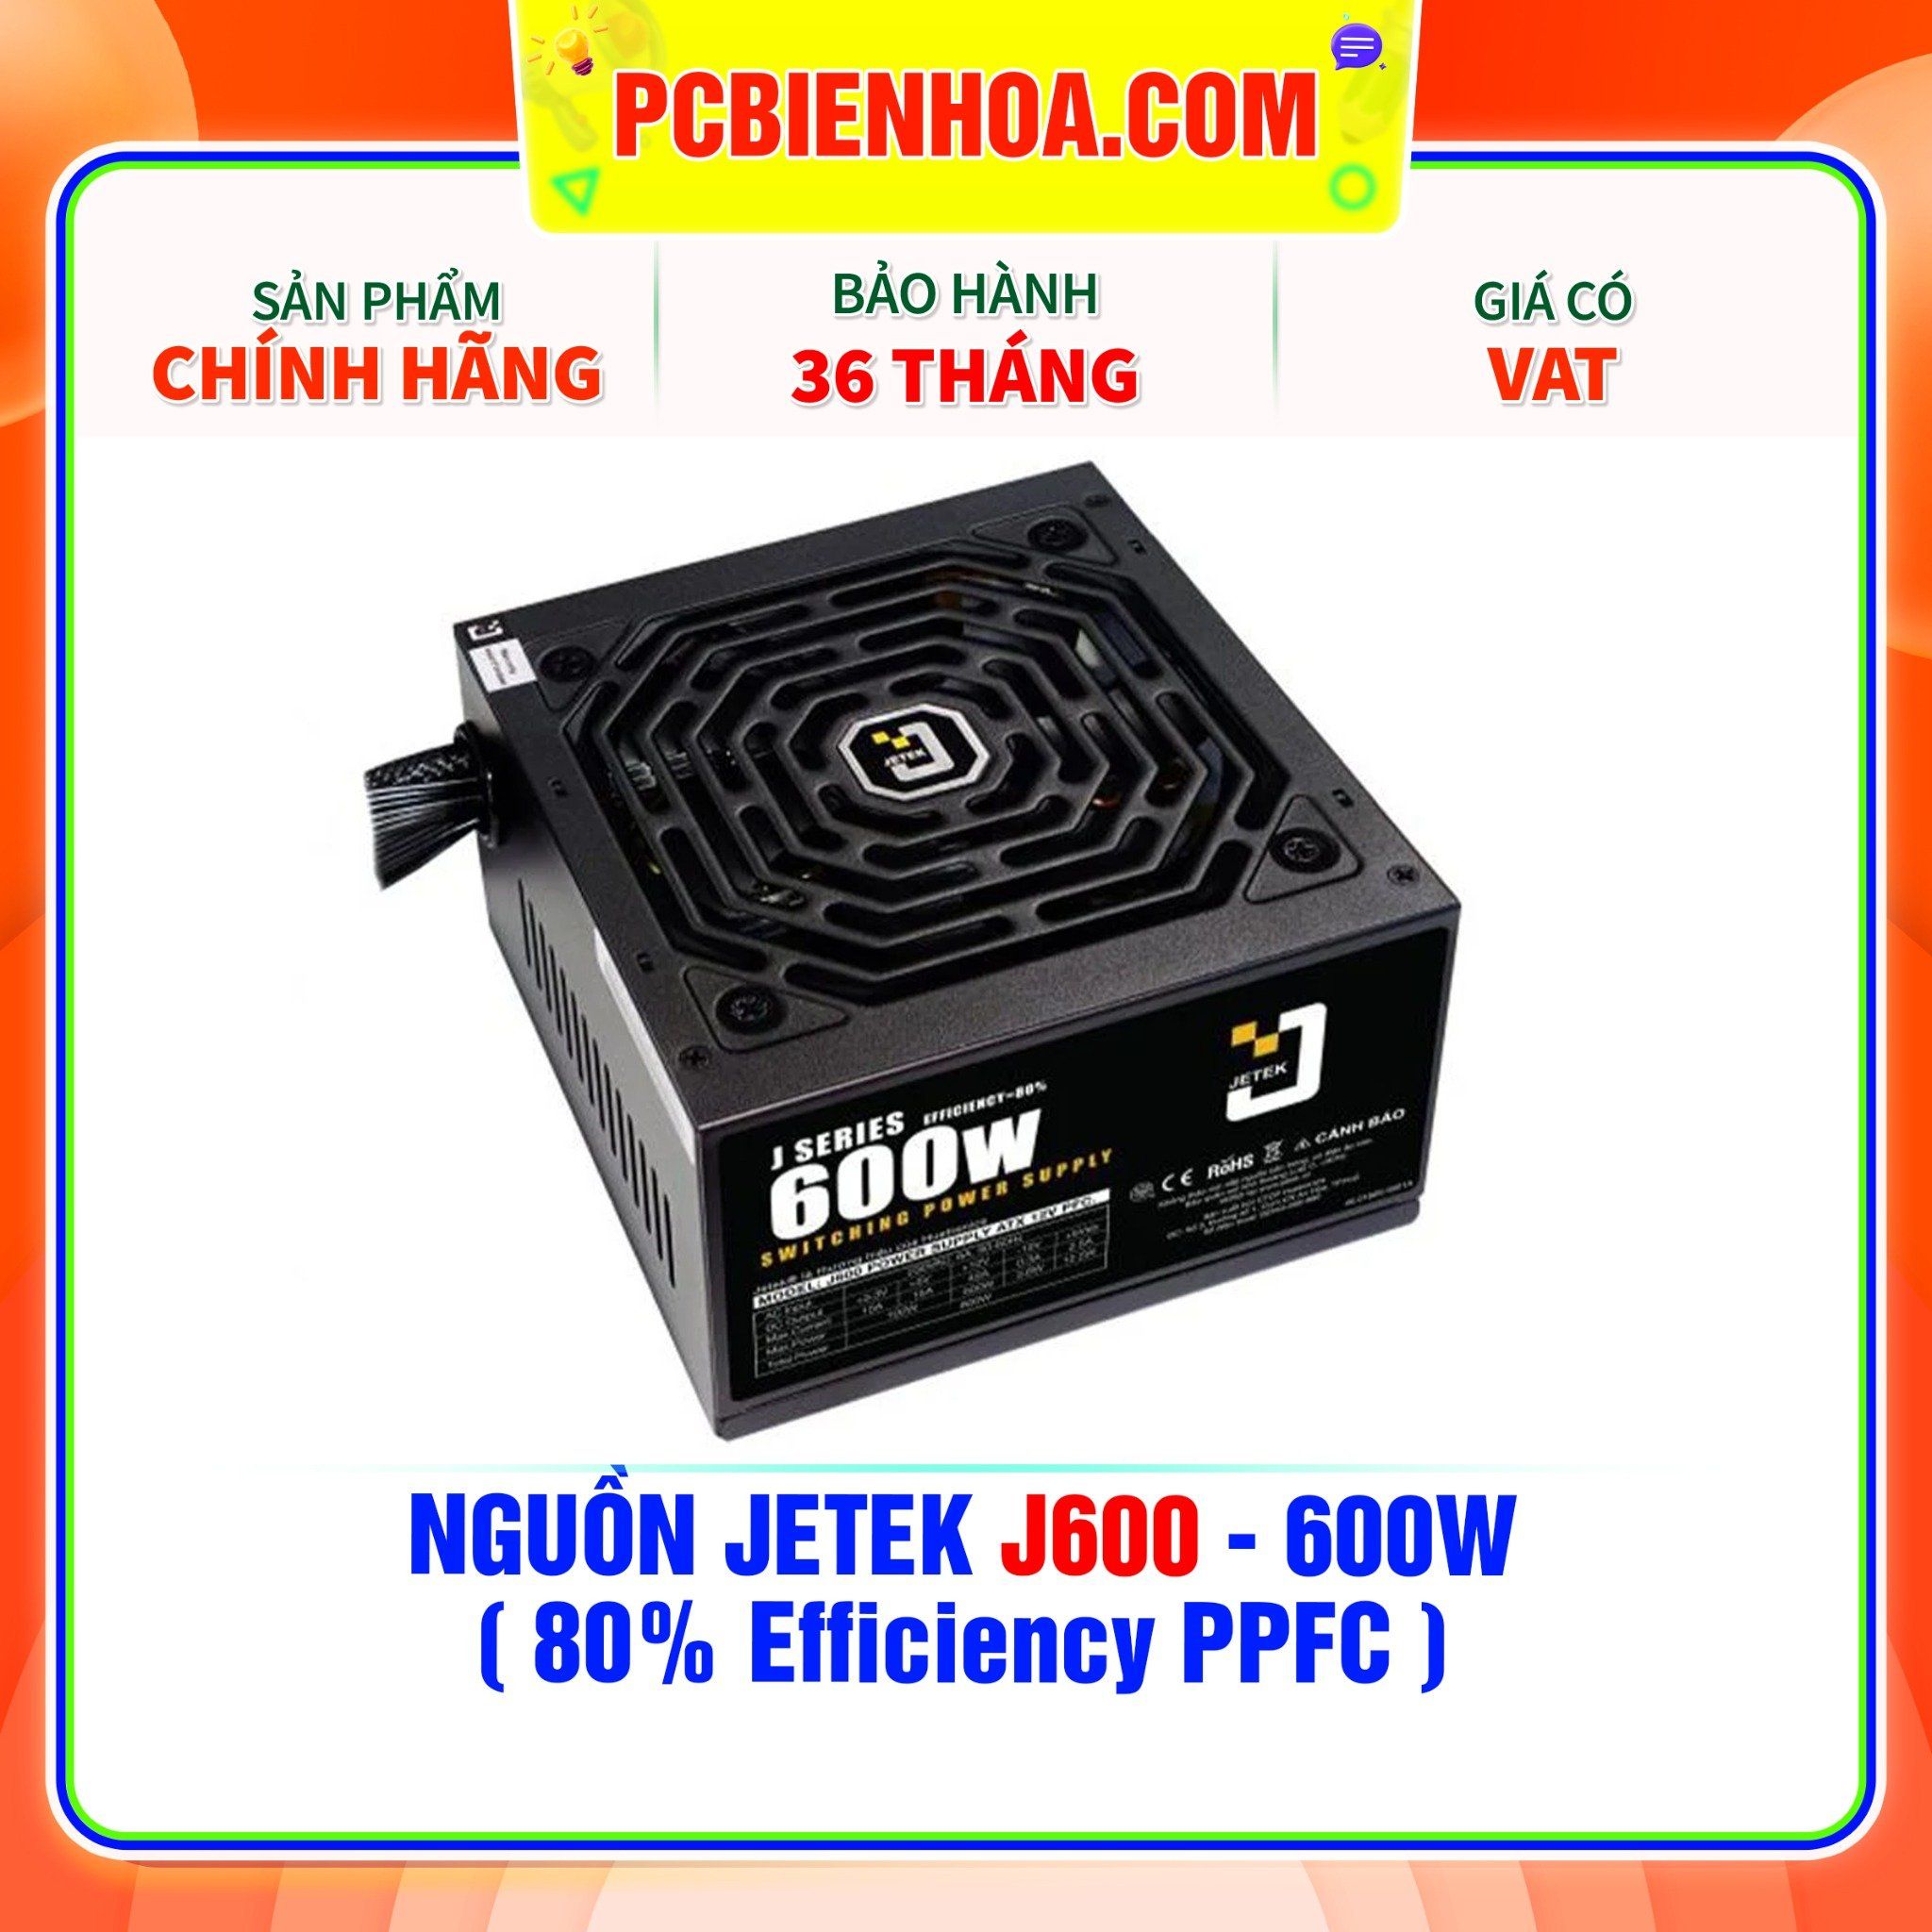  NGUỒN JETEK J600 - 600W ( 80% Efficiency PPFC ) 